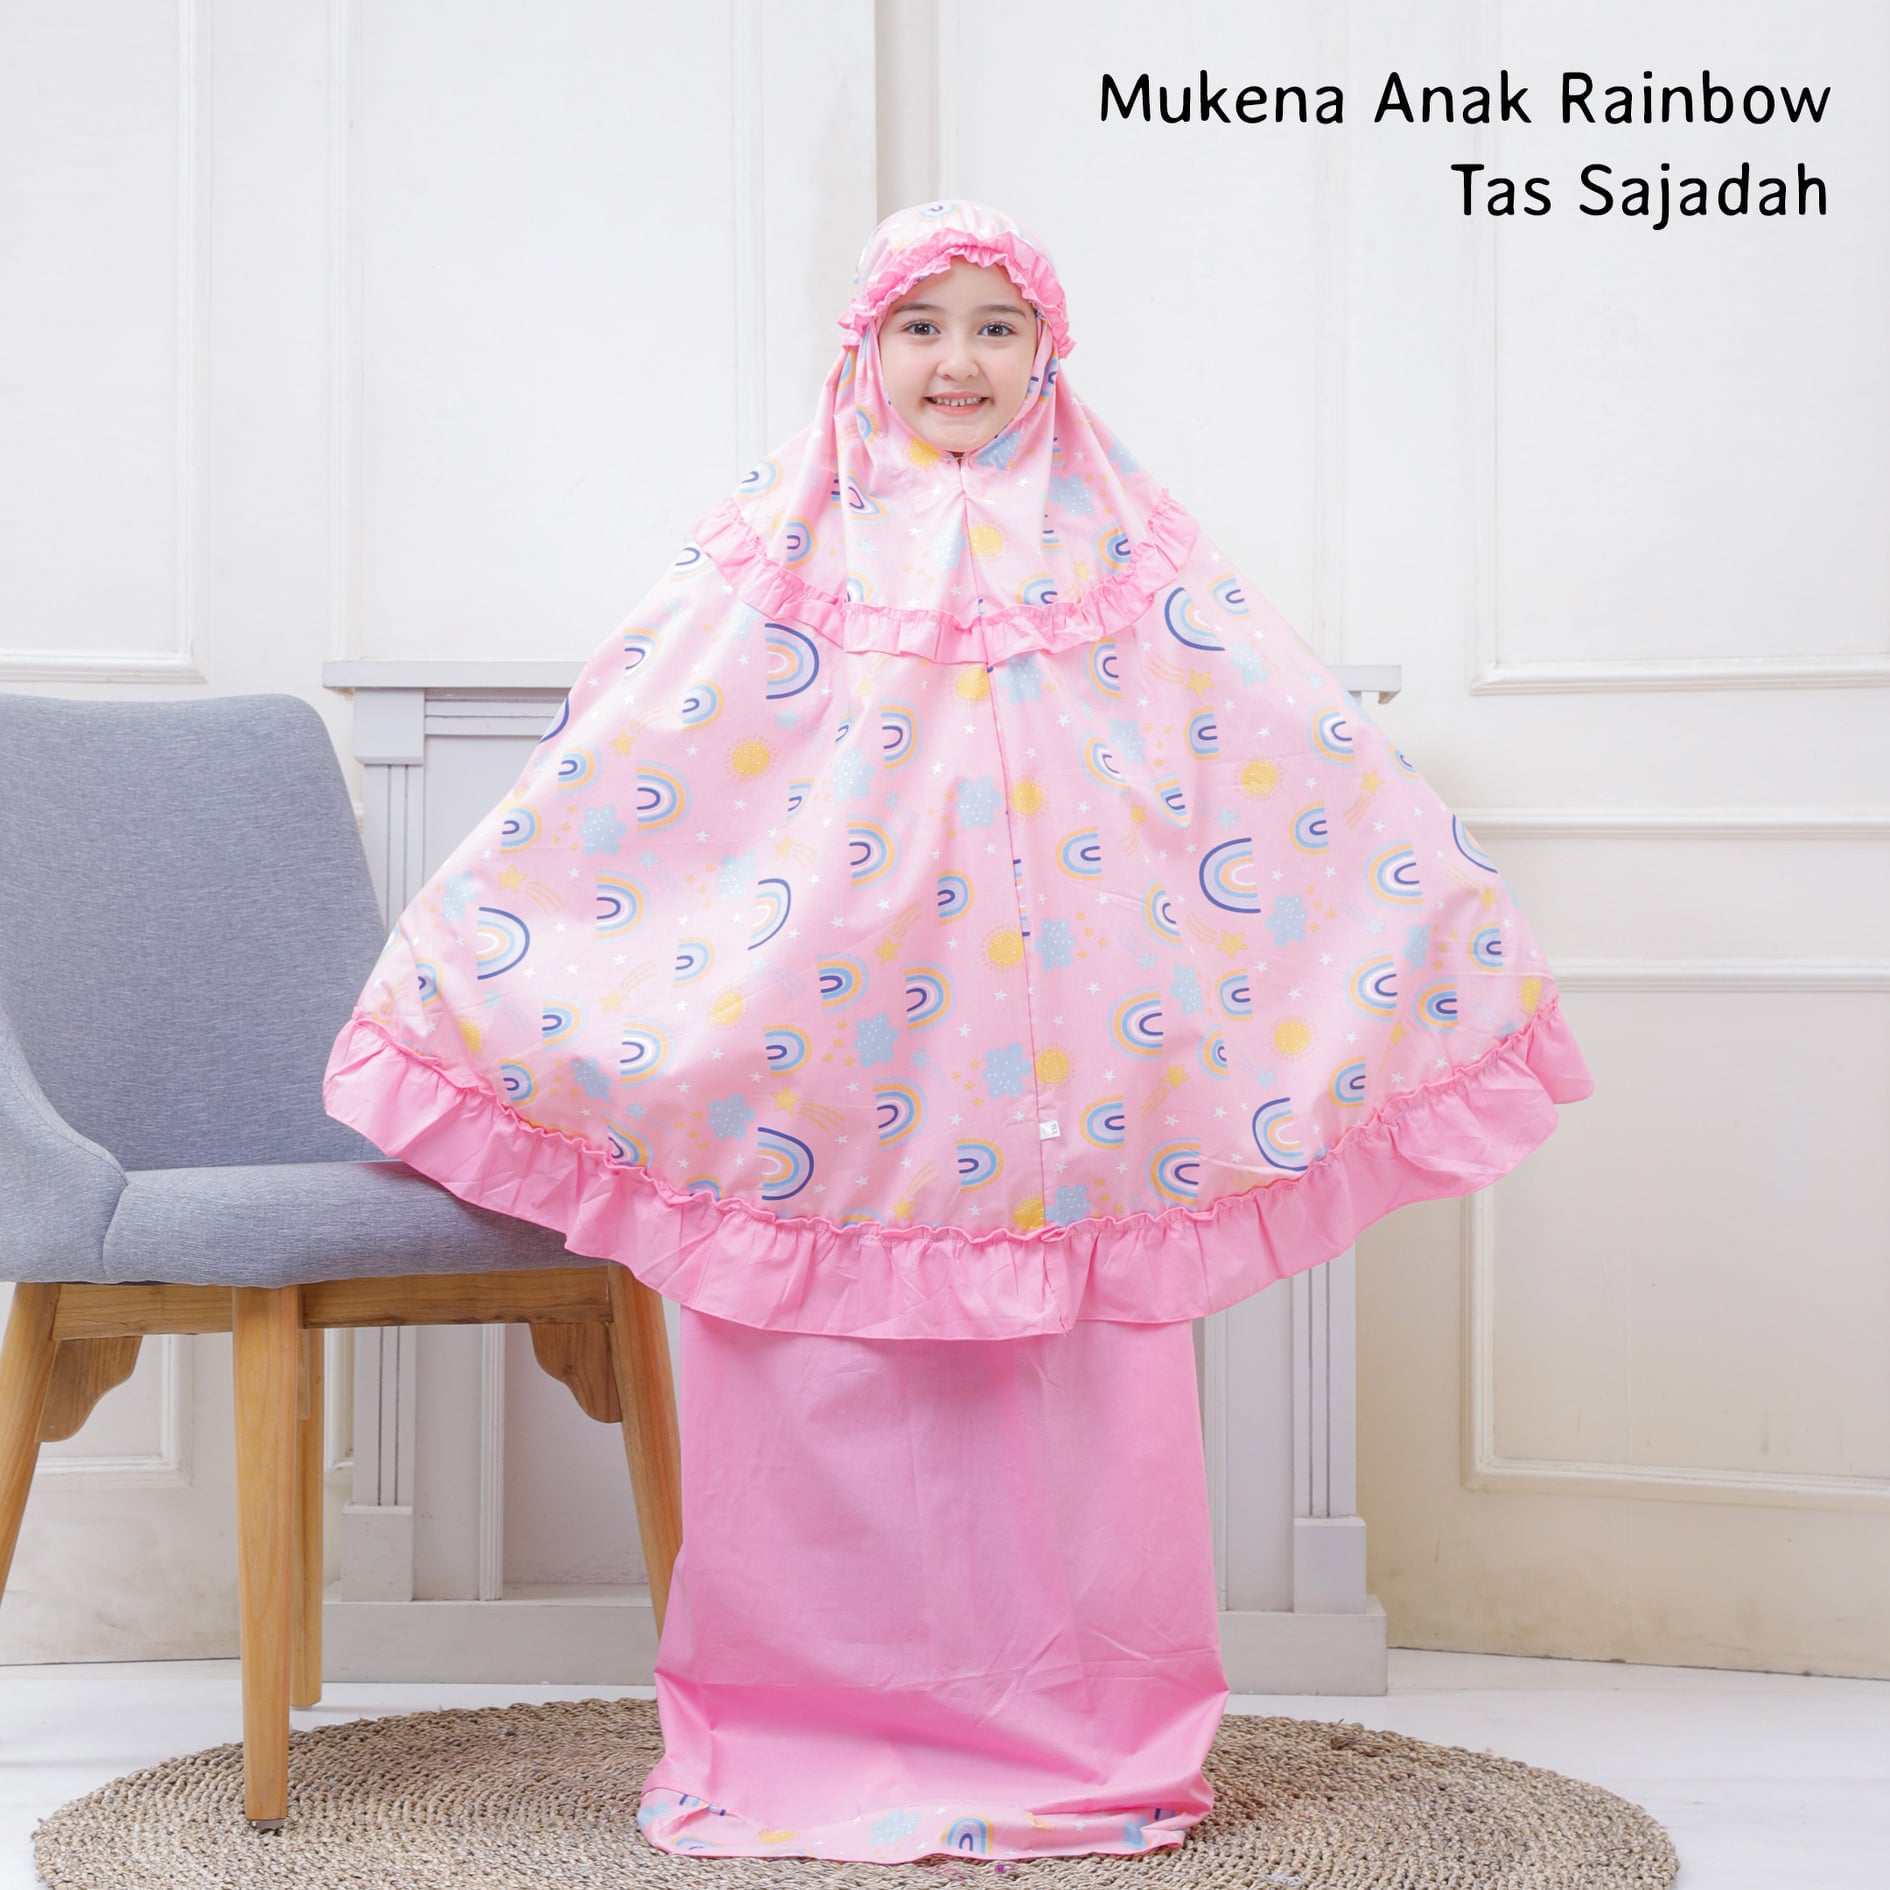 Mukena Anak Katun Rainbow Pink ( Tas Sajadah )